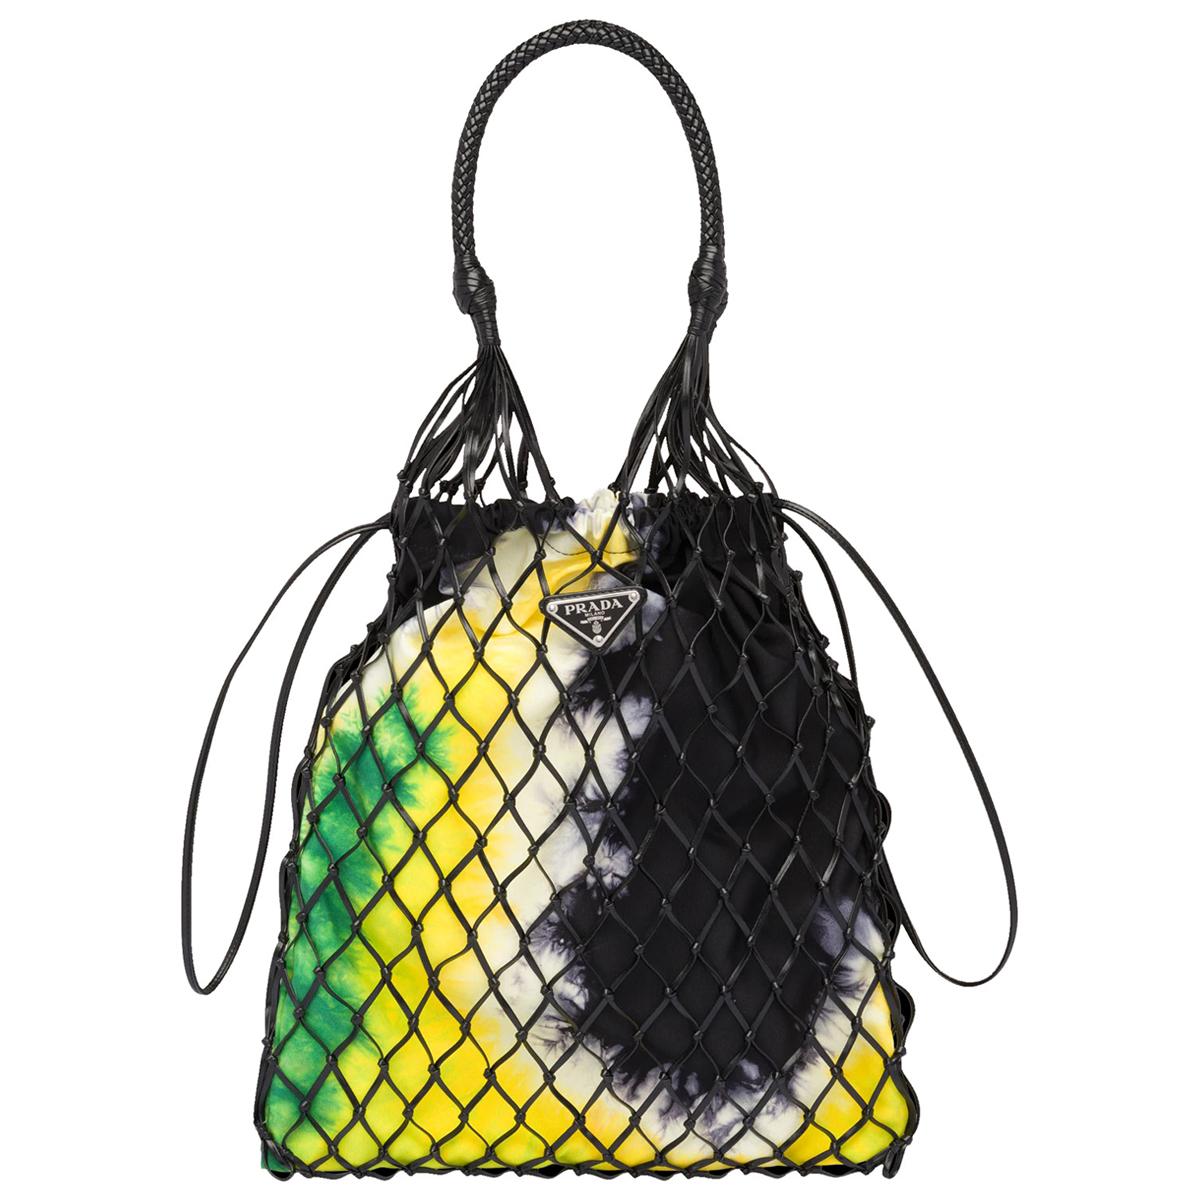 Prada Spring/Summer 2019 Leather Mesh Bag w/ Canvas Tie-Dye rt. $1, 520